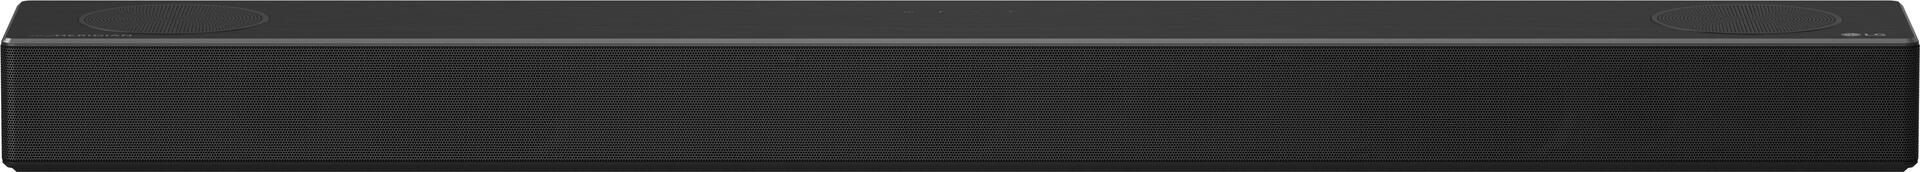 LG SN7CY Soundbar für Heimkino 3.0.2 Kanal kabellos Bluetooth App gesteuert 160 Watt Schwarz  - Onlineshop JACOB Elektronik